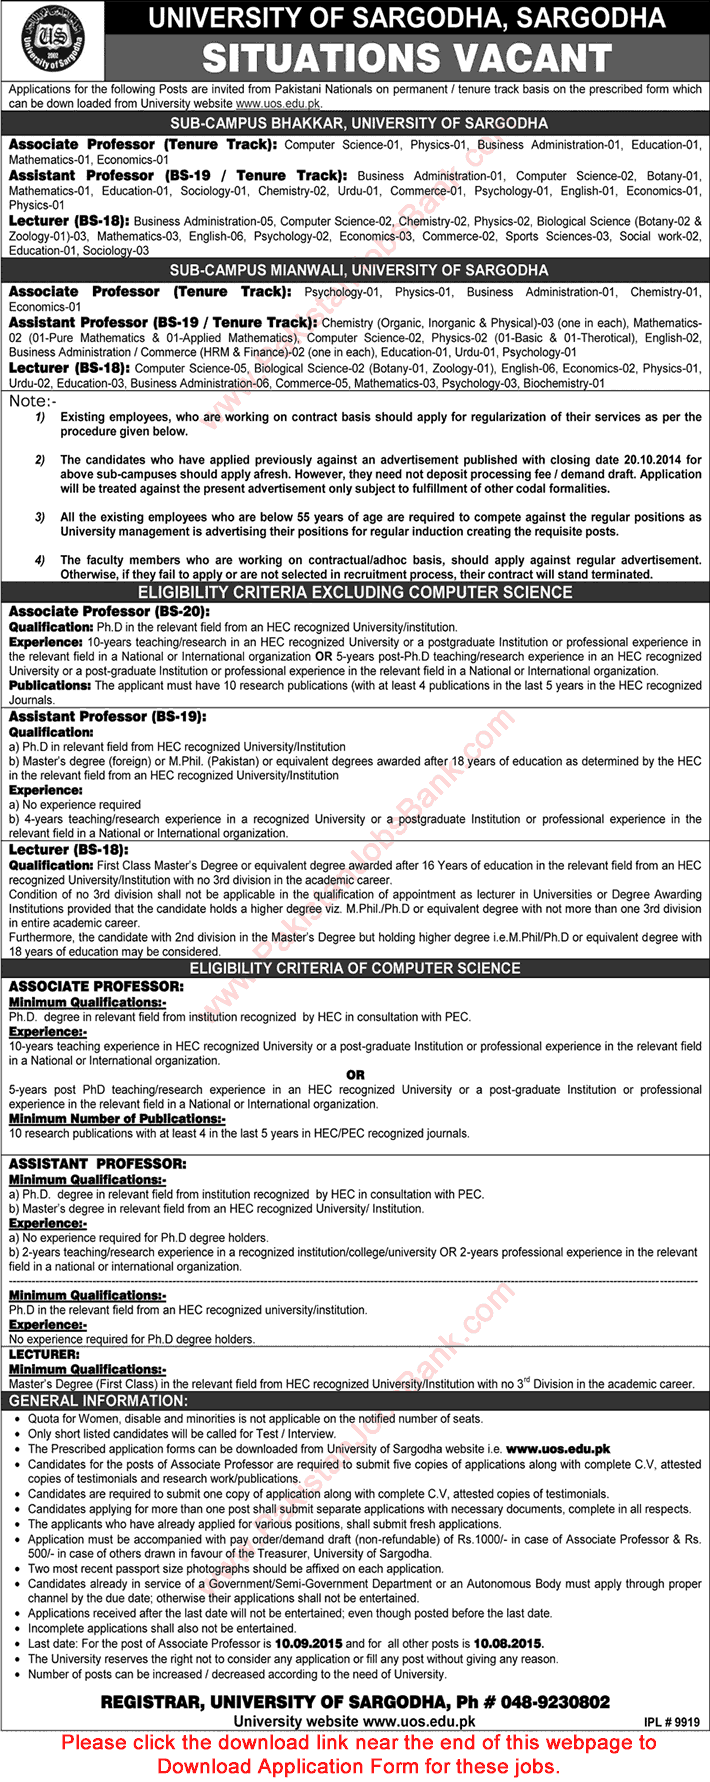 University of Sargodha Mianwali / Bhakkar Campus Jobs 2015 July / August Application Form Teaching Faculty